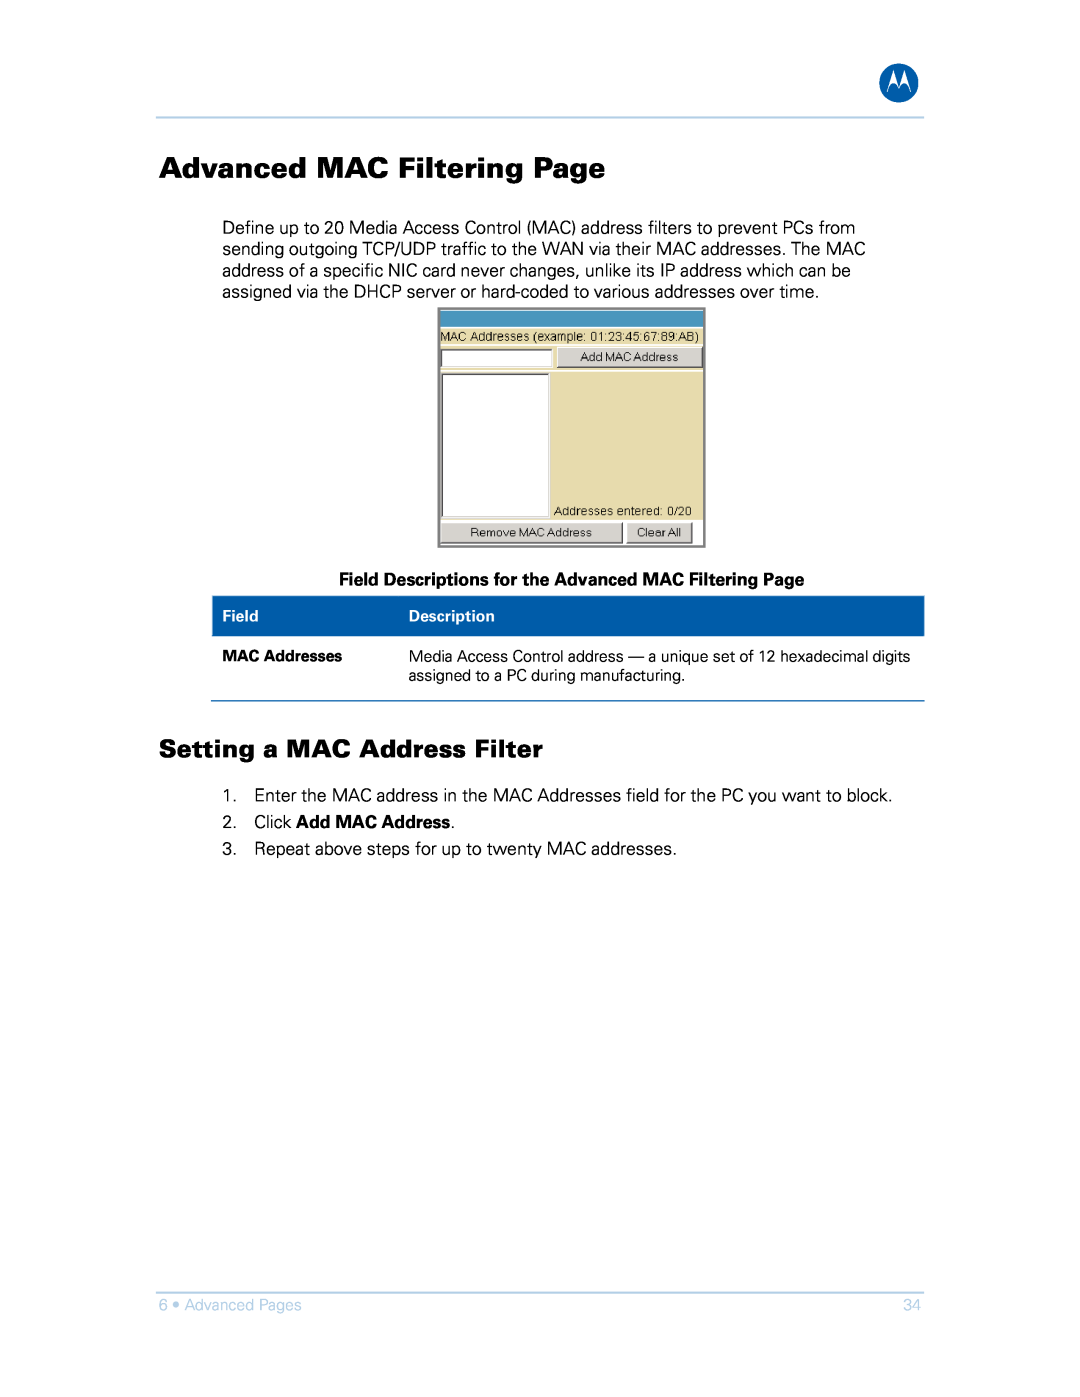 Motorola SVG1501UE, SVG1501E manual Advanced MAC Filtering Page, Setting a MAC Address Filter, Click Add MAC Address 